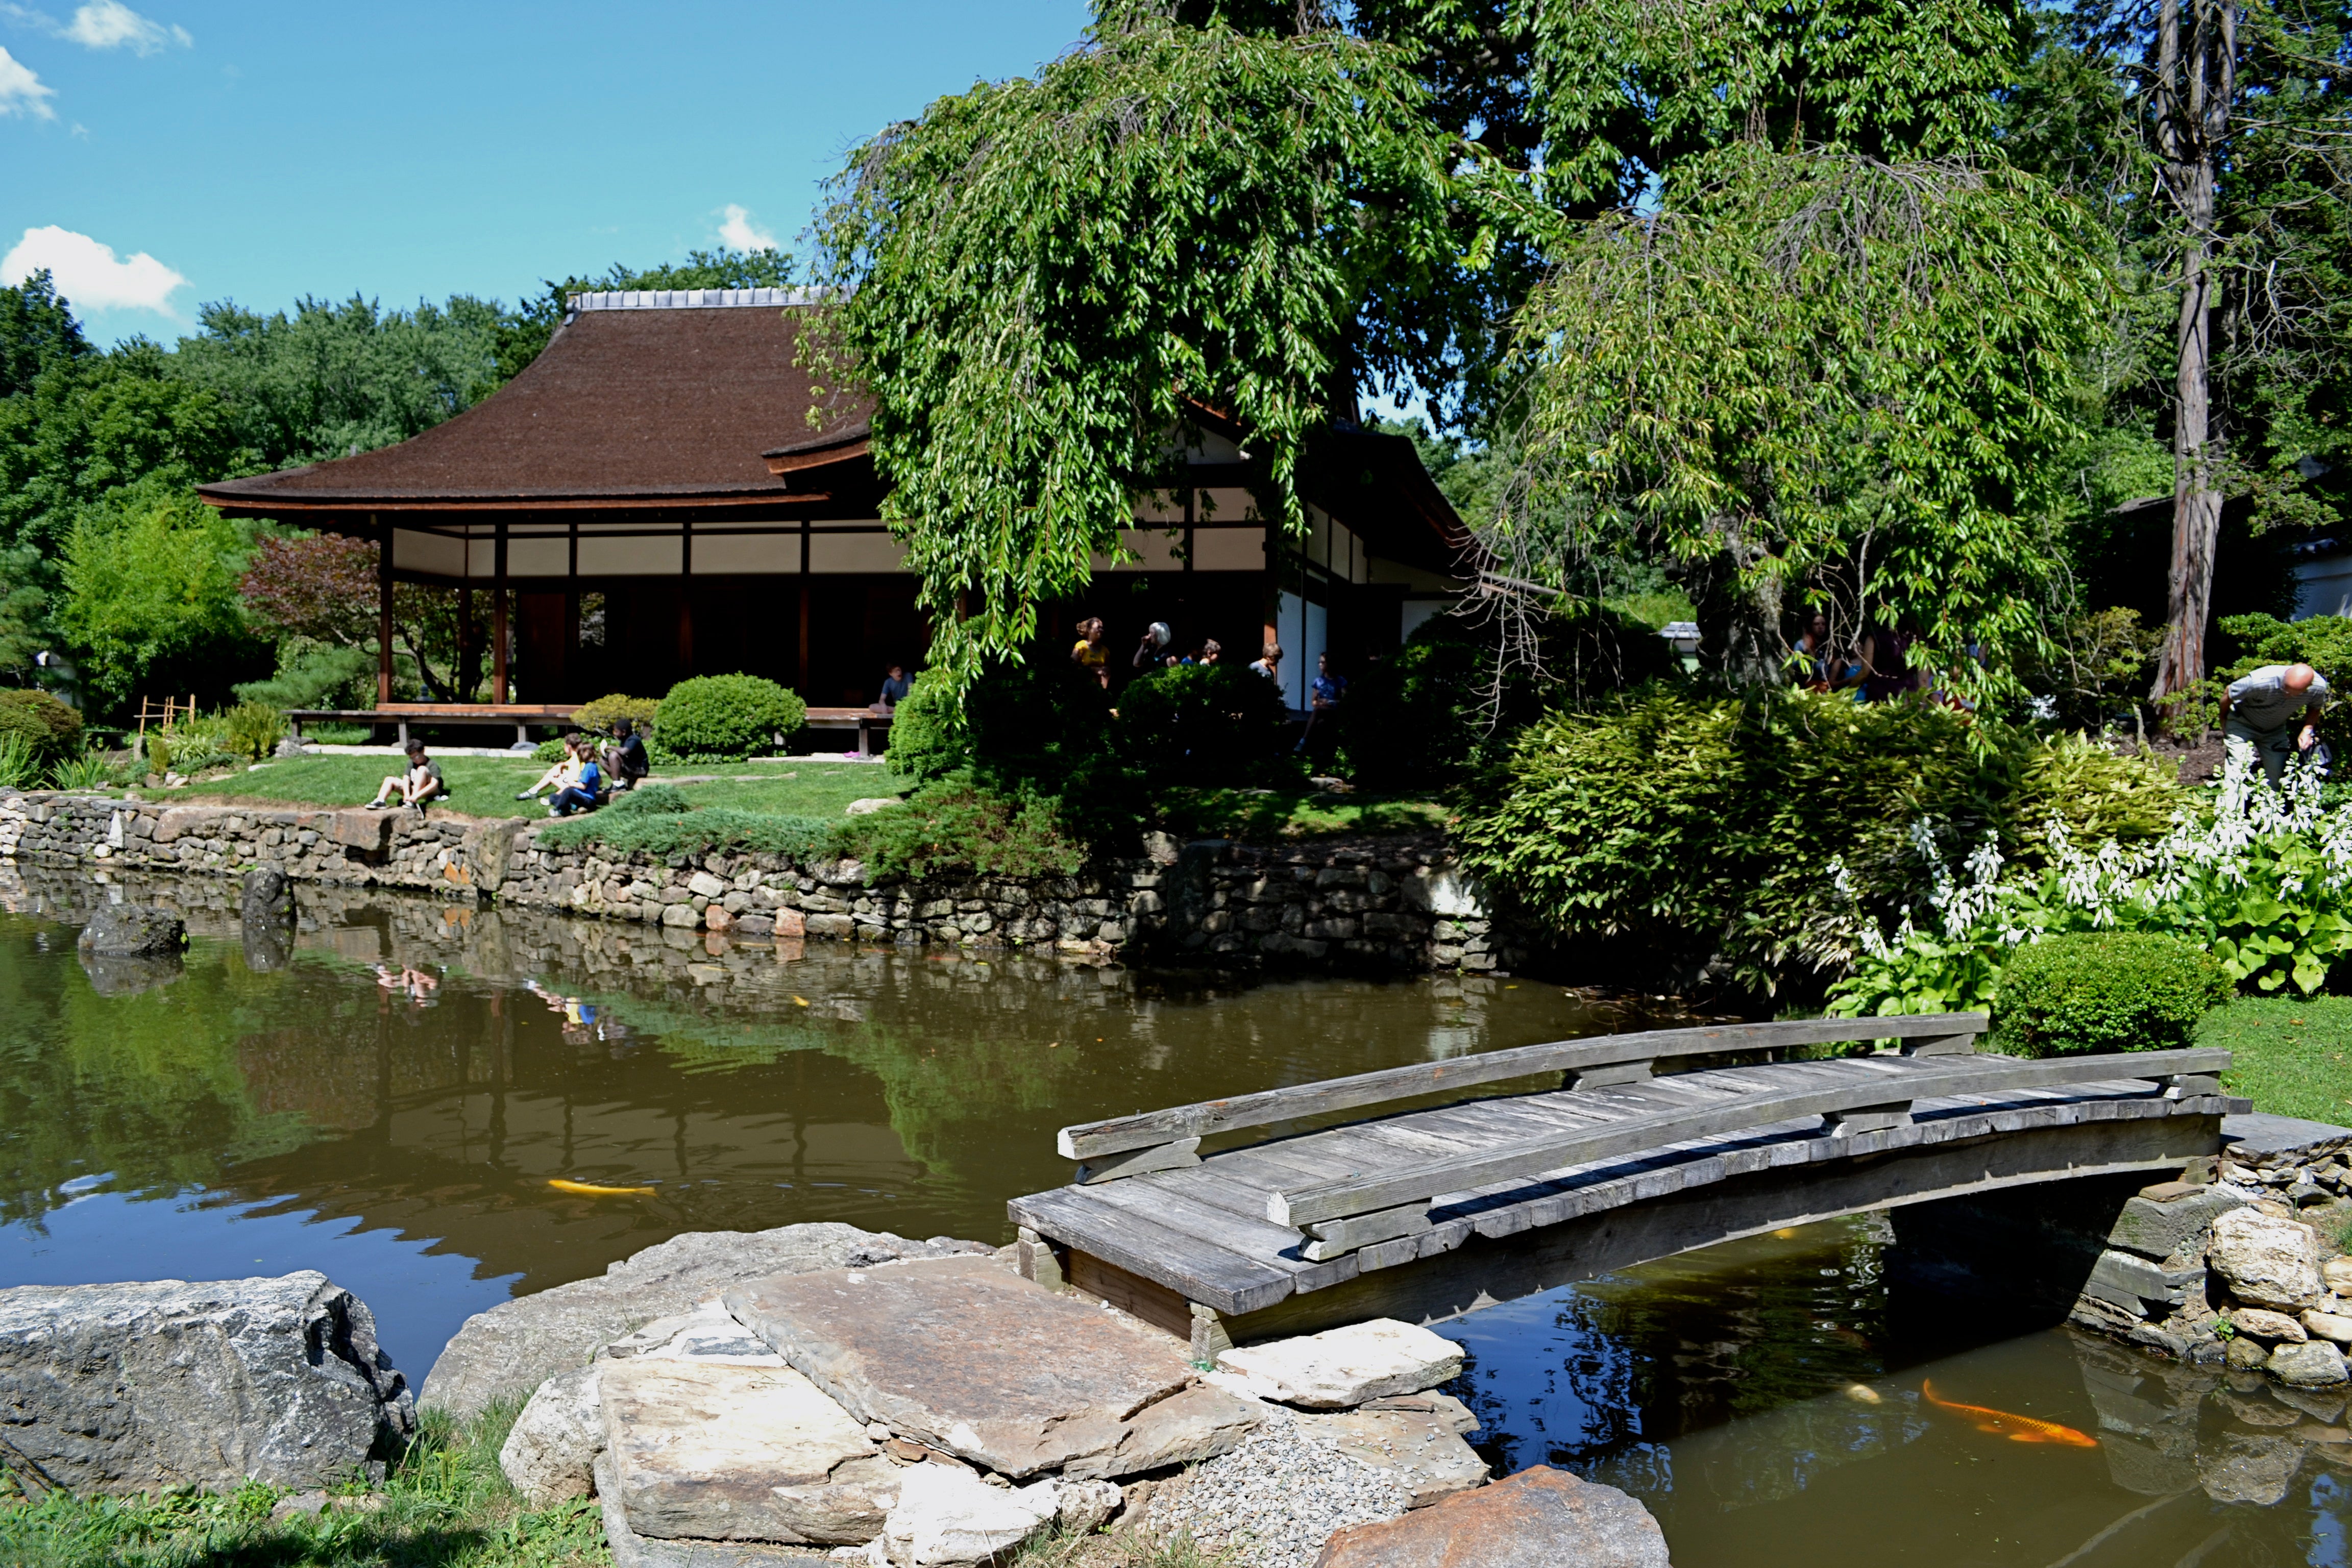 Shofuso house, koi pond and island bridge at the Shofuso Japanese House and Garden